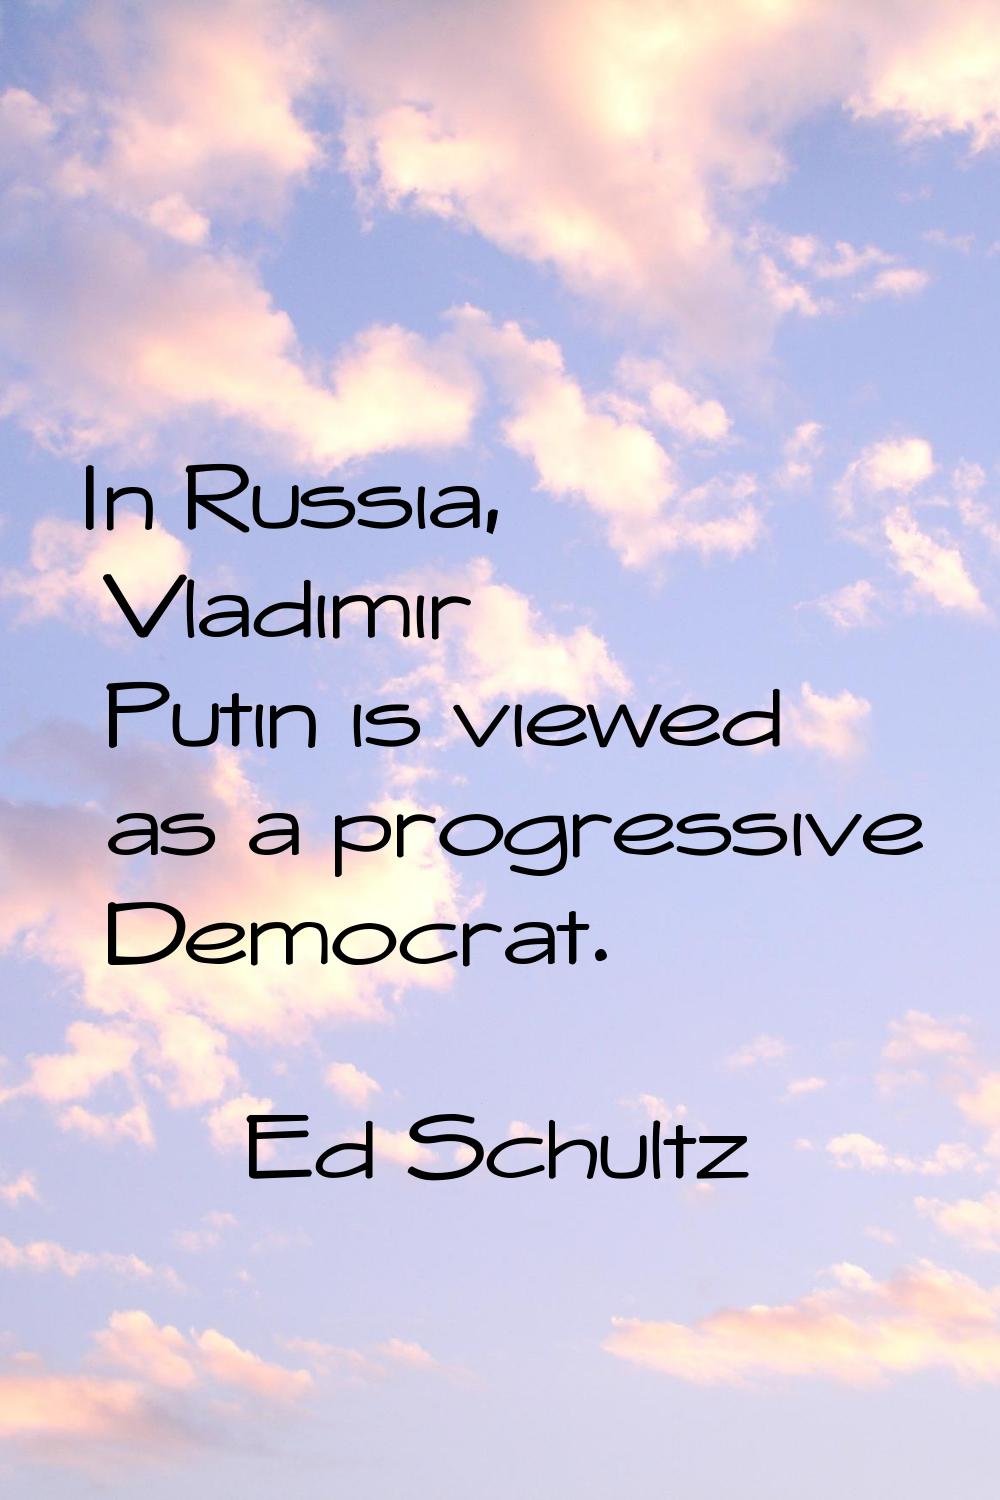 In Russia, Vladimir Putin is viewed as a progressive Democrat.